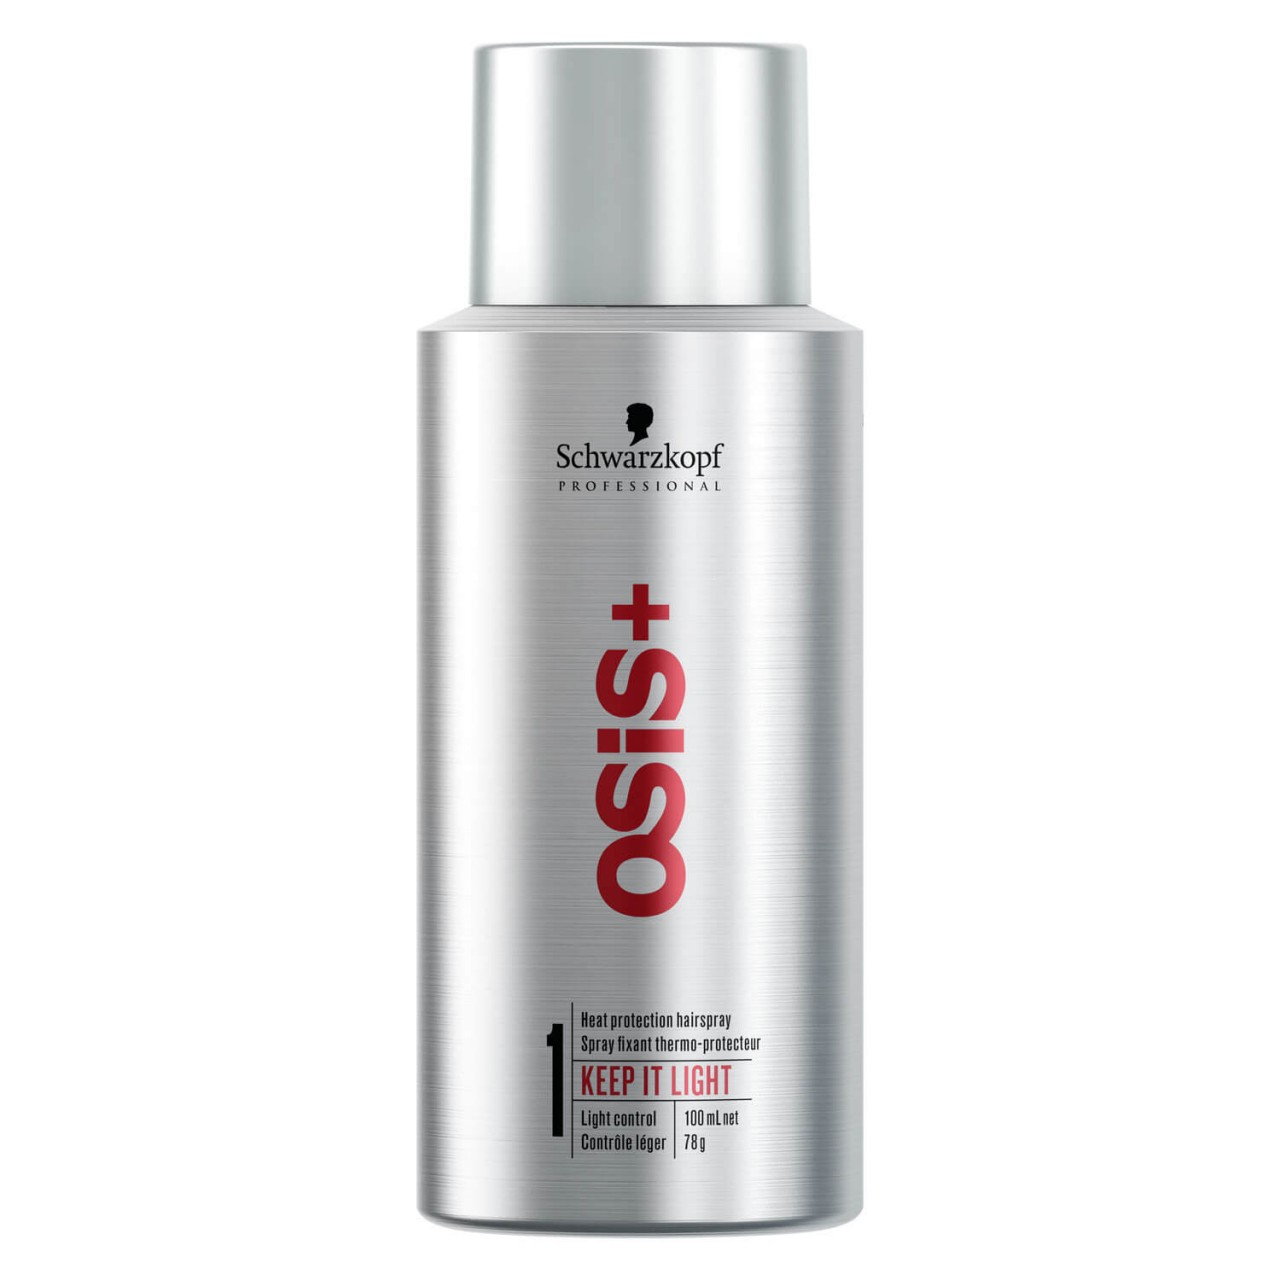 Osis - Keep it Light Heat Protection Hairspray von Schwarzkopf